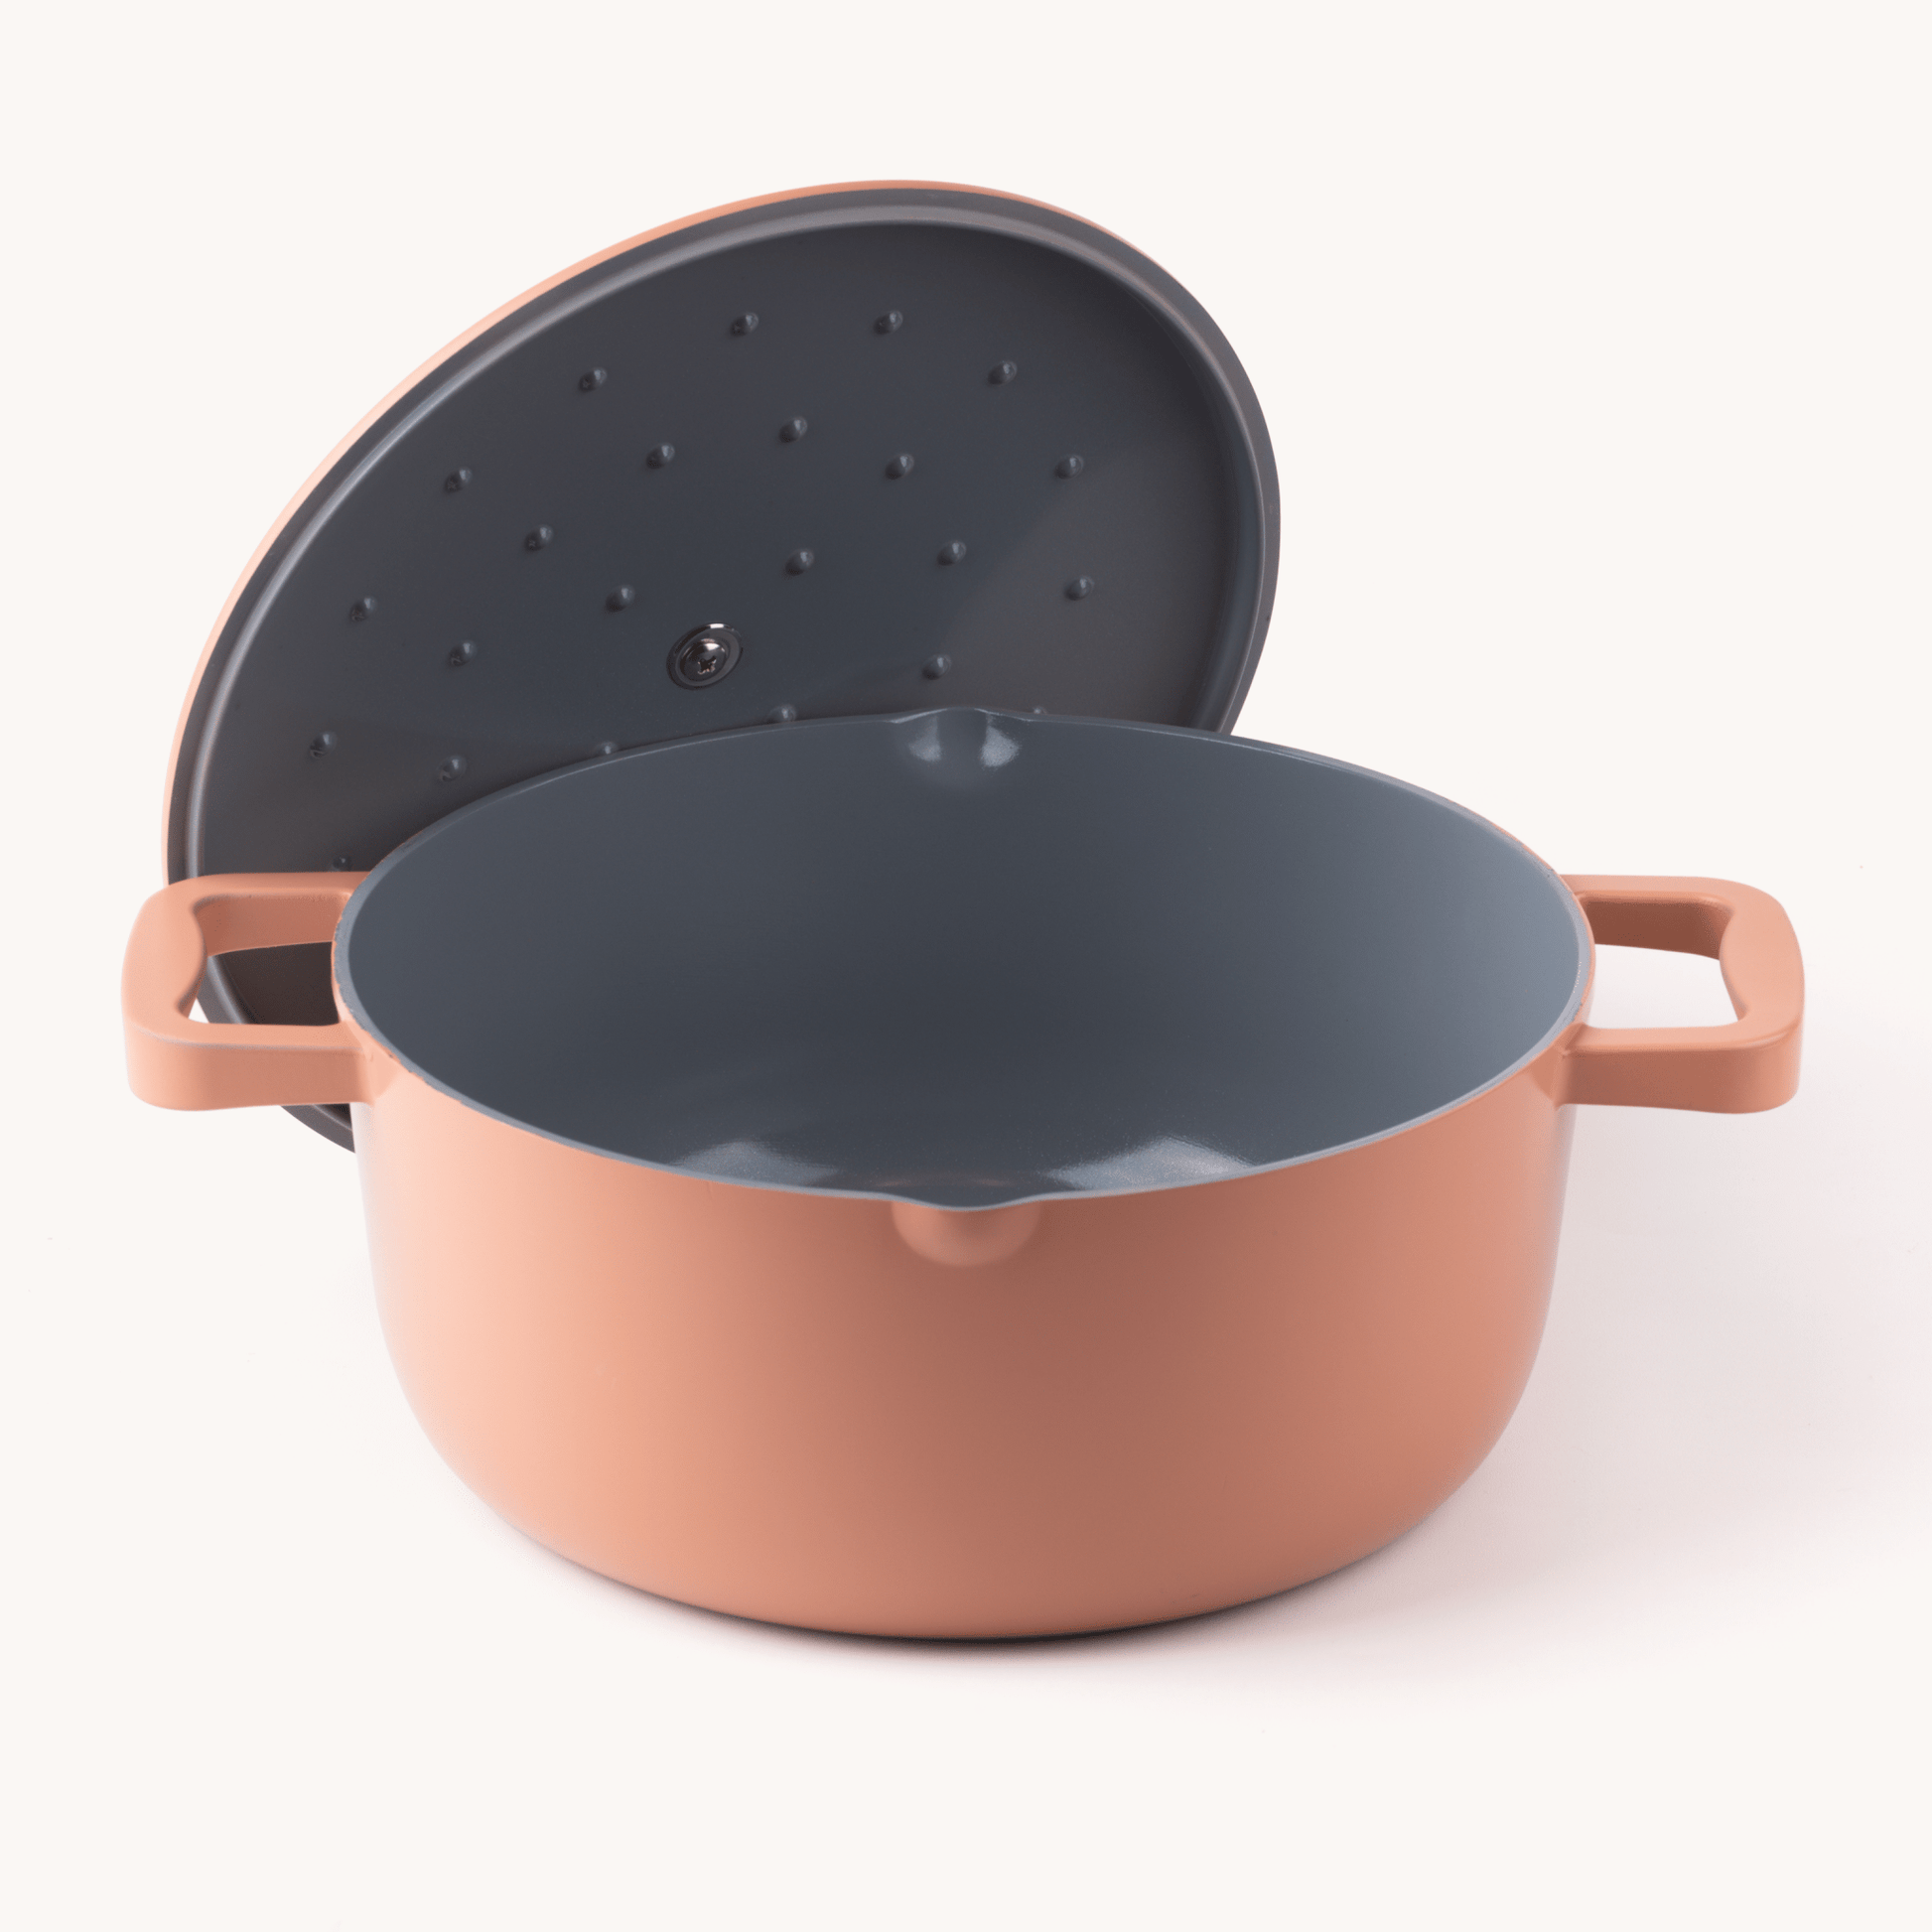 Super Pot - Homebody | Ceramic Non-stick cookware | No PFOA, PTFE